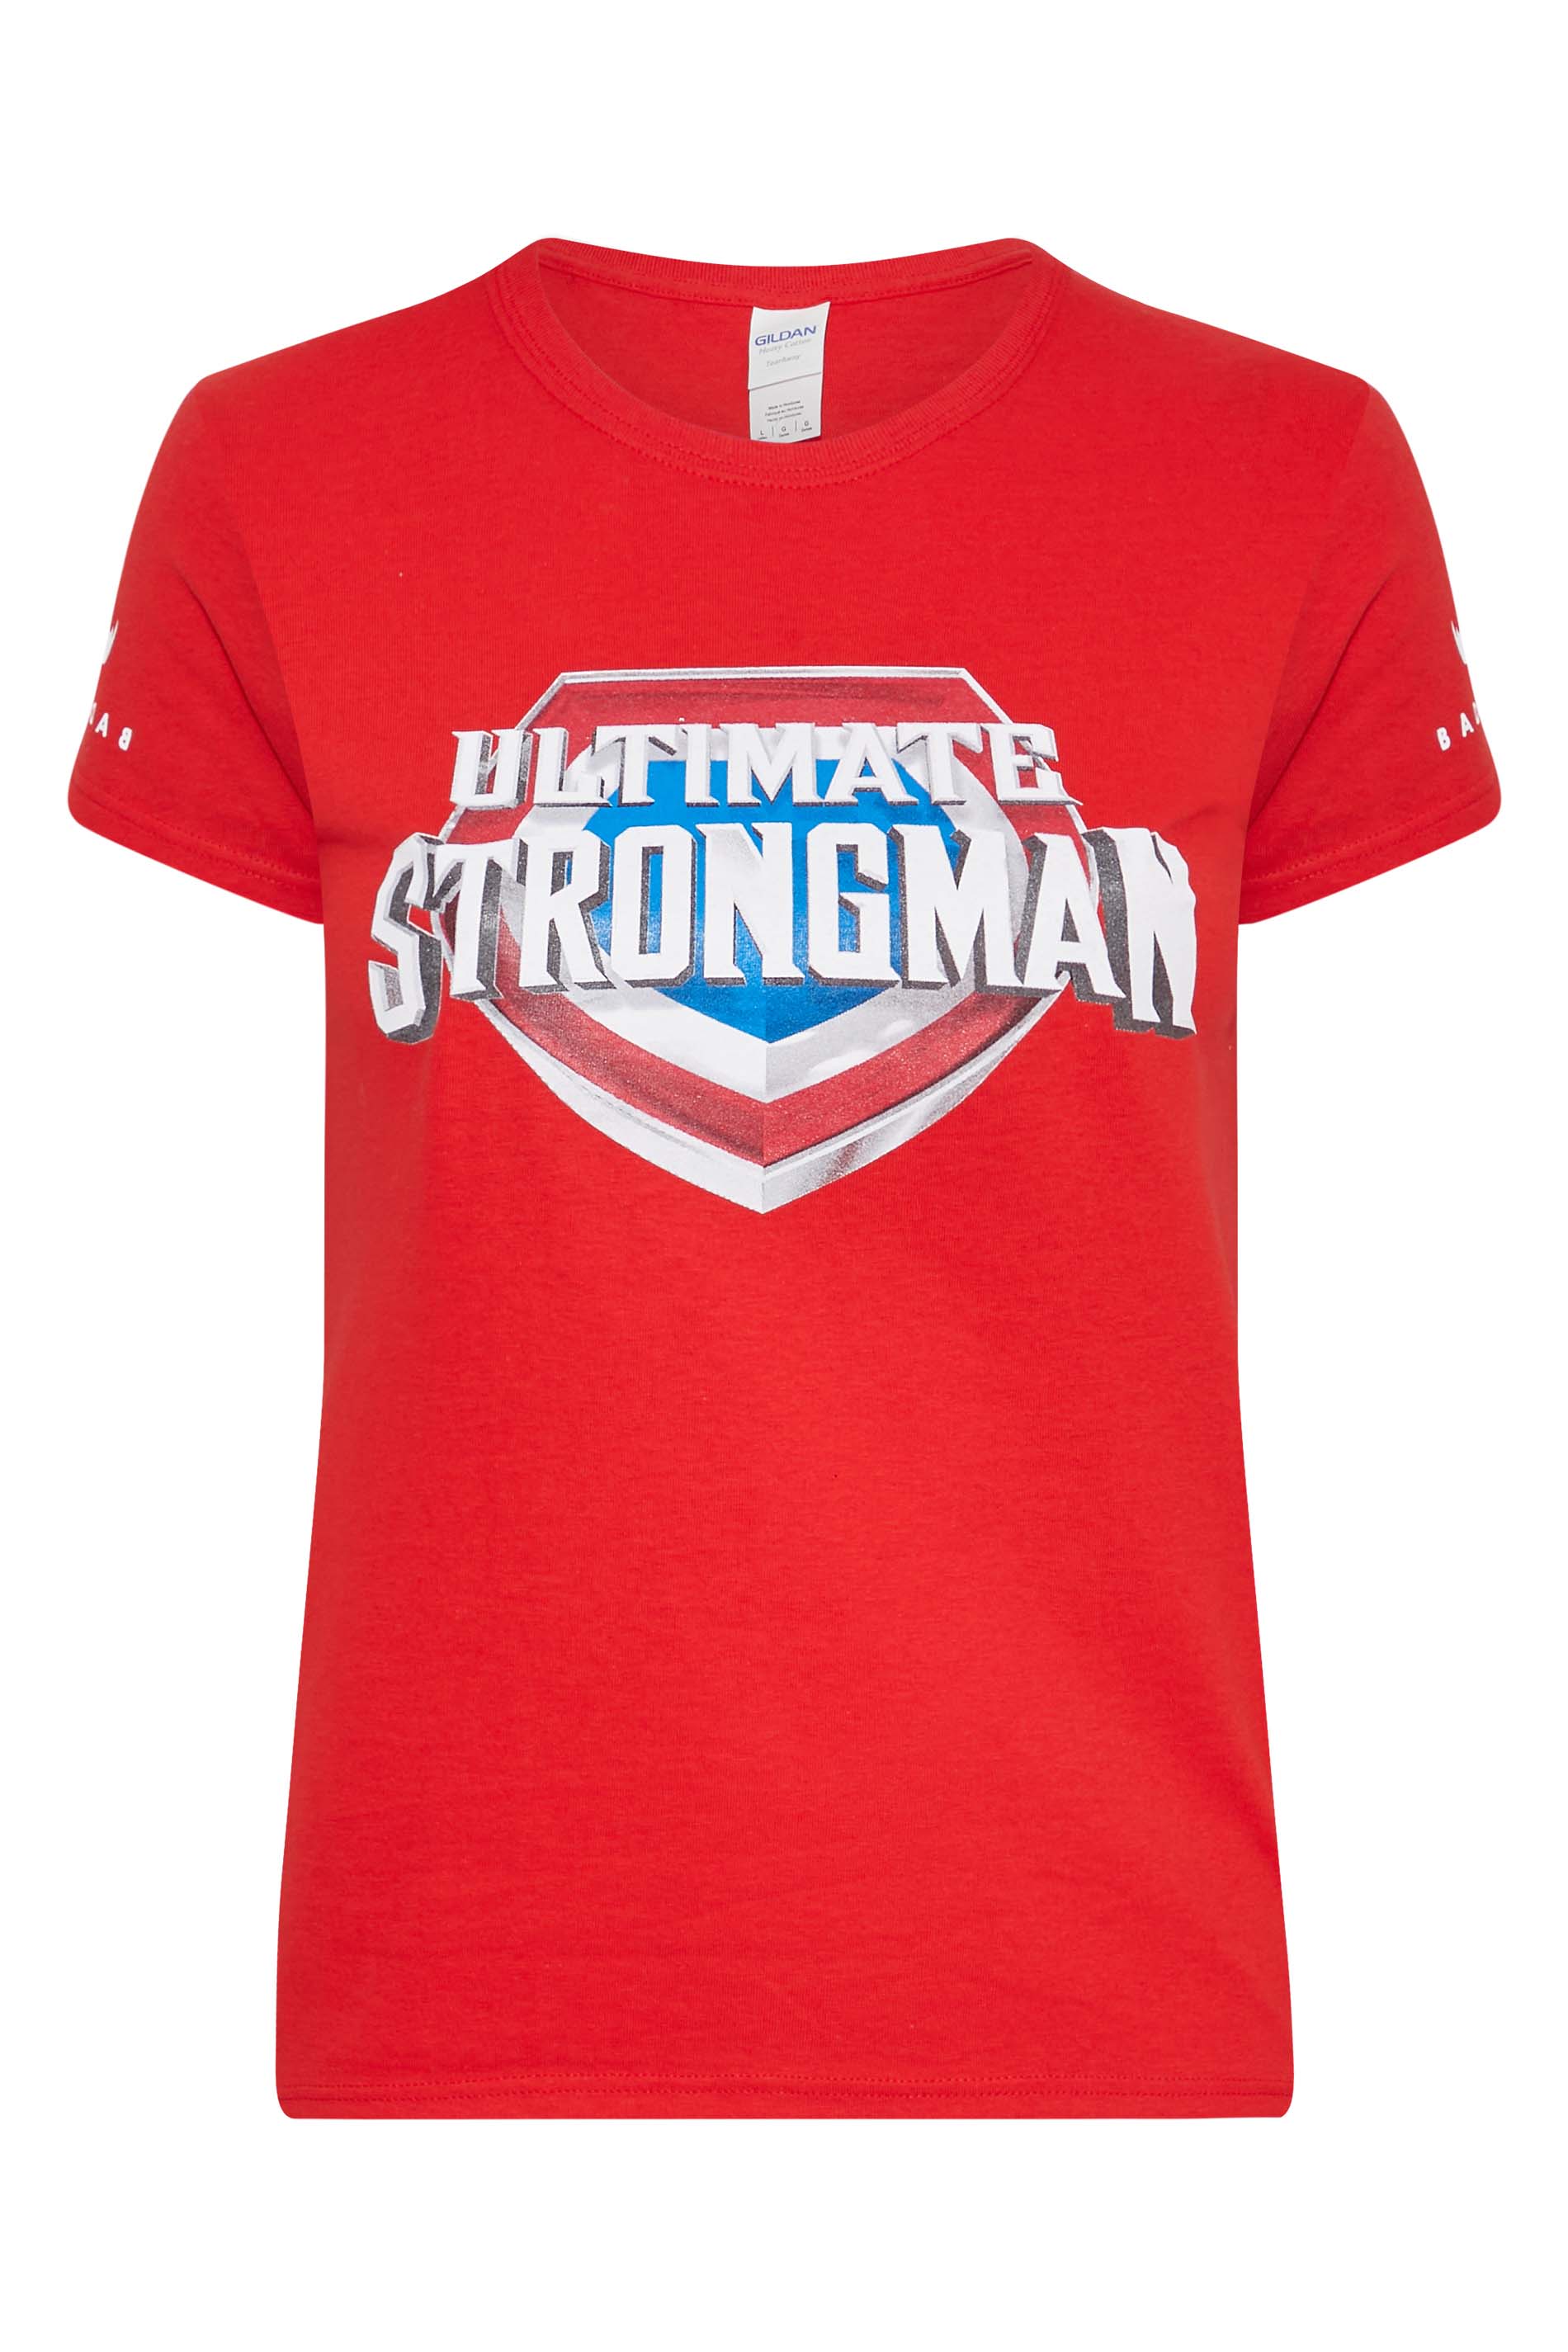 BadRhino Women's Red Ultimate Strongman T-Shirt 1